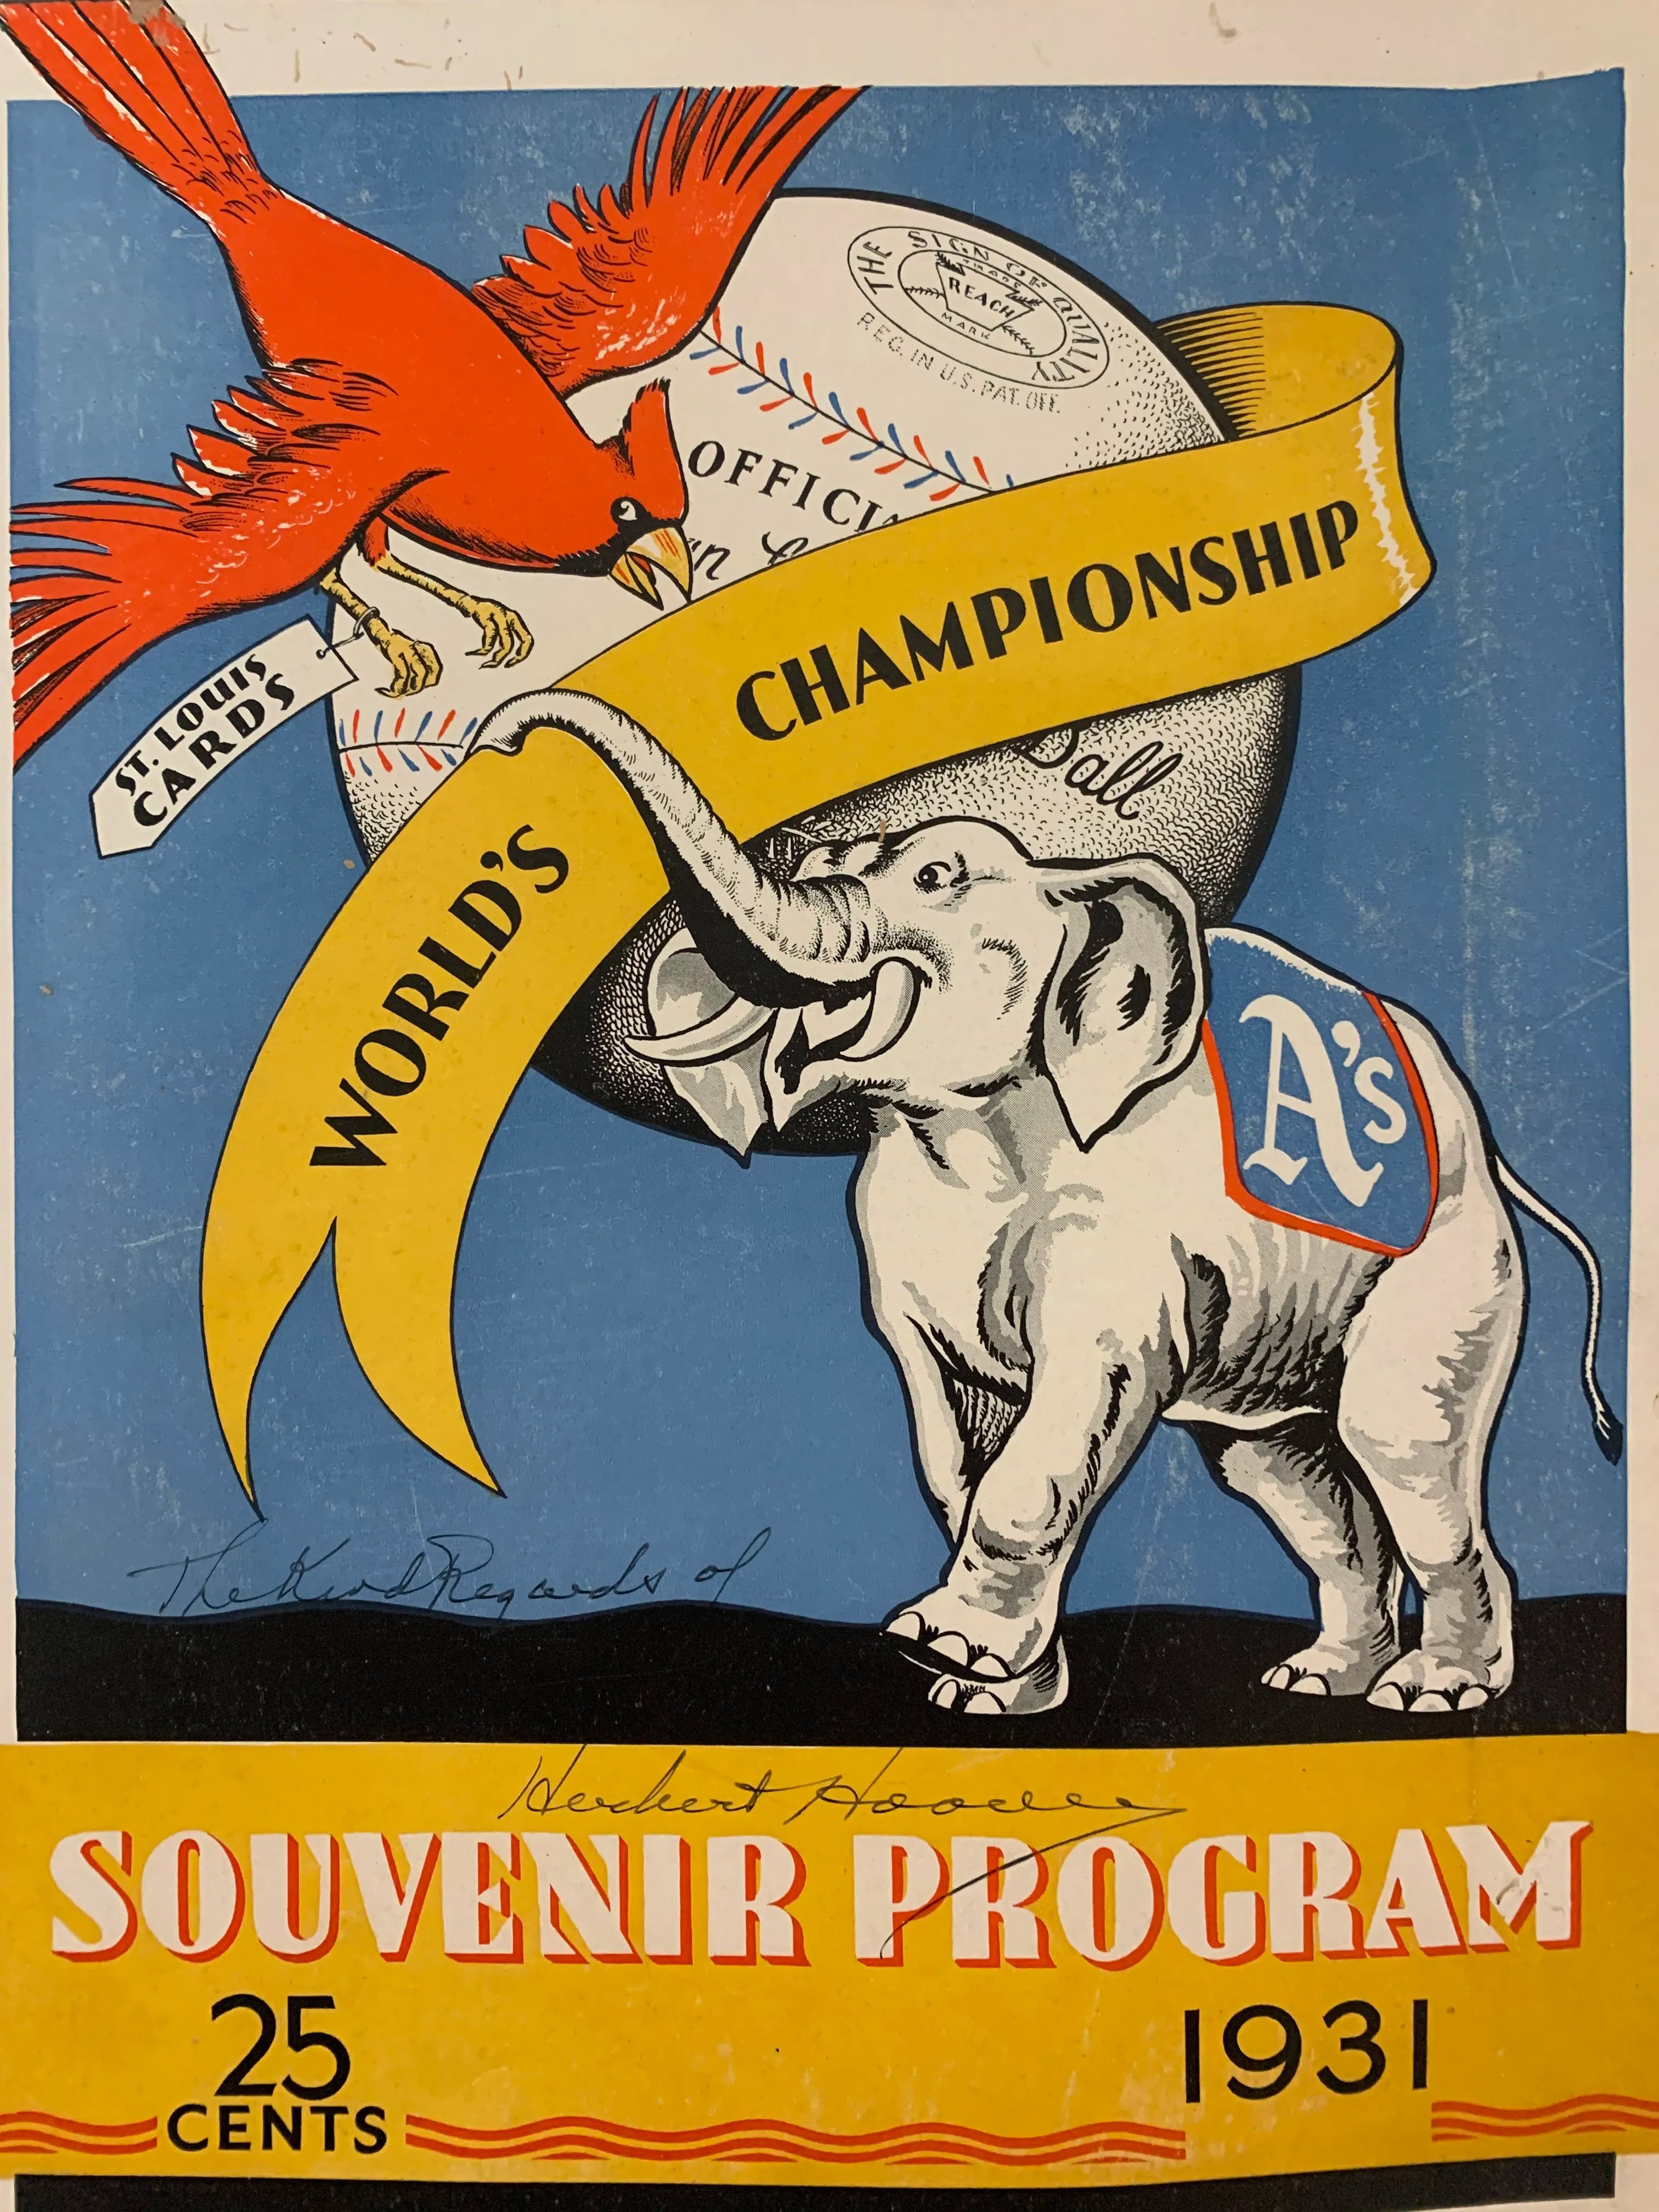 Philadelphia Athletics Hats, Shirts & Memorabilia - Shibe Vintage Sports